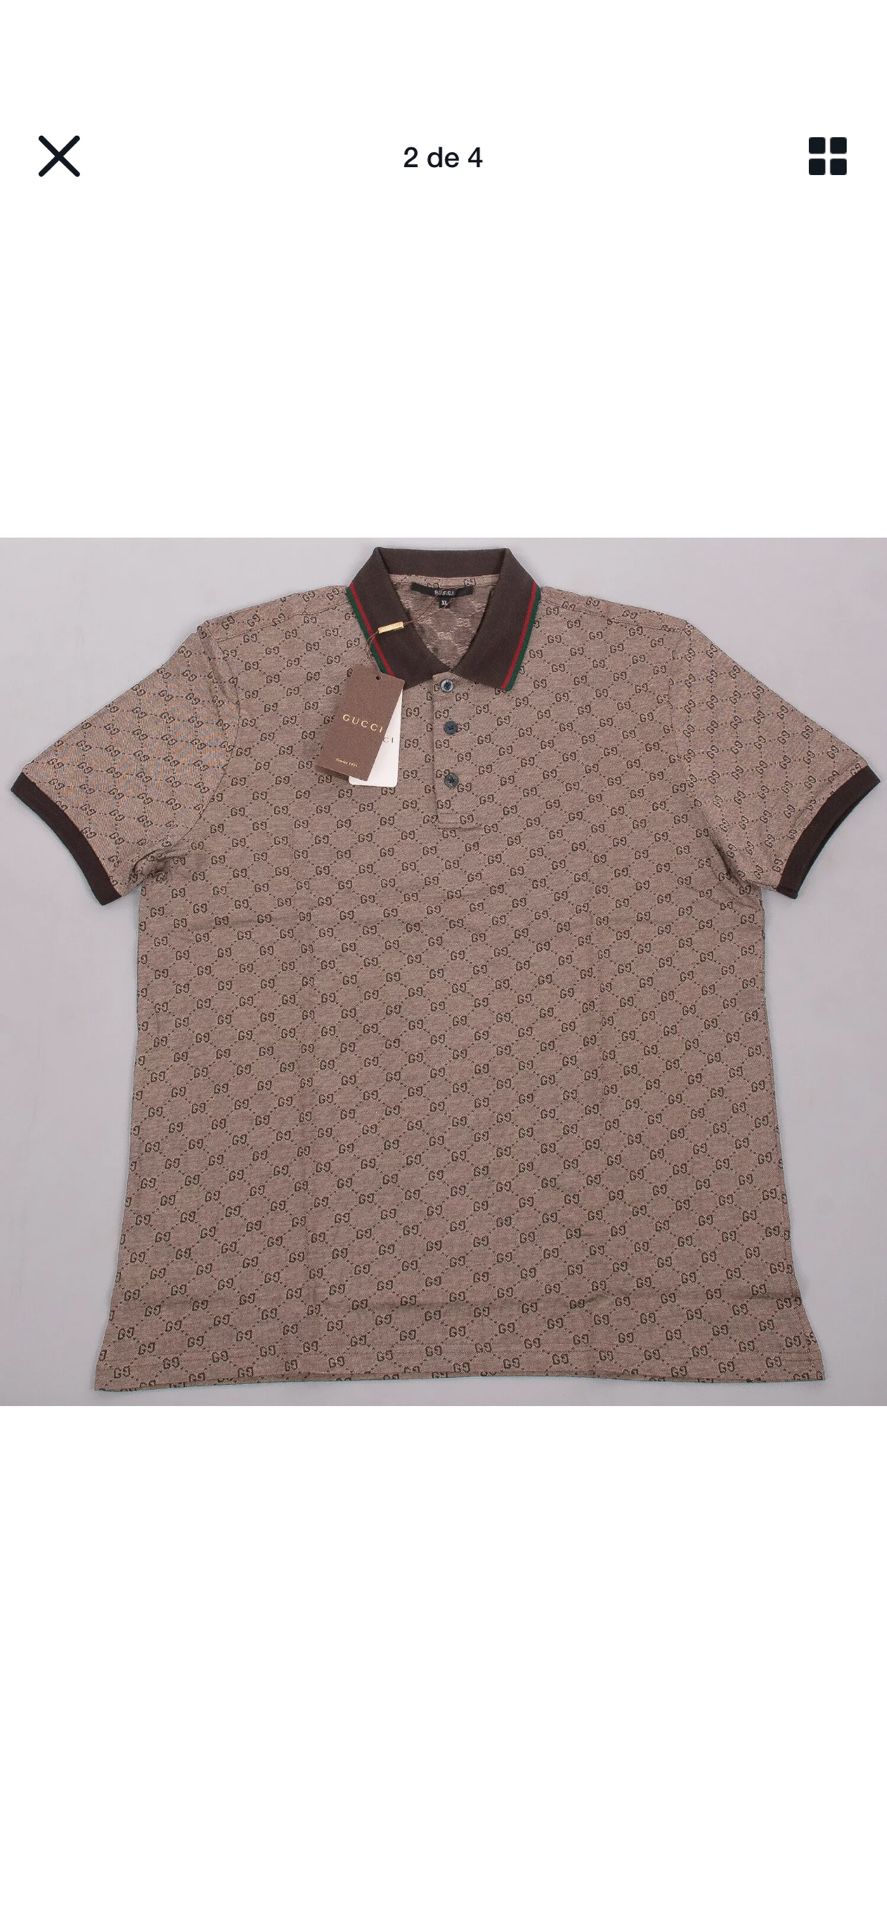 Gucci T-shirt size XL